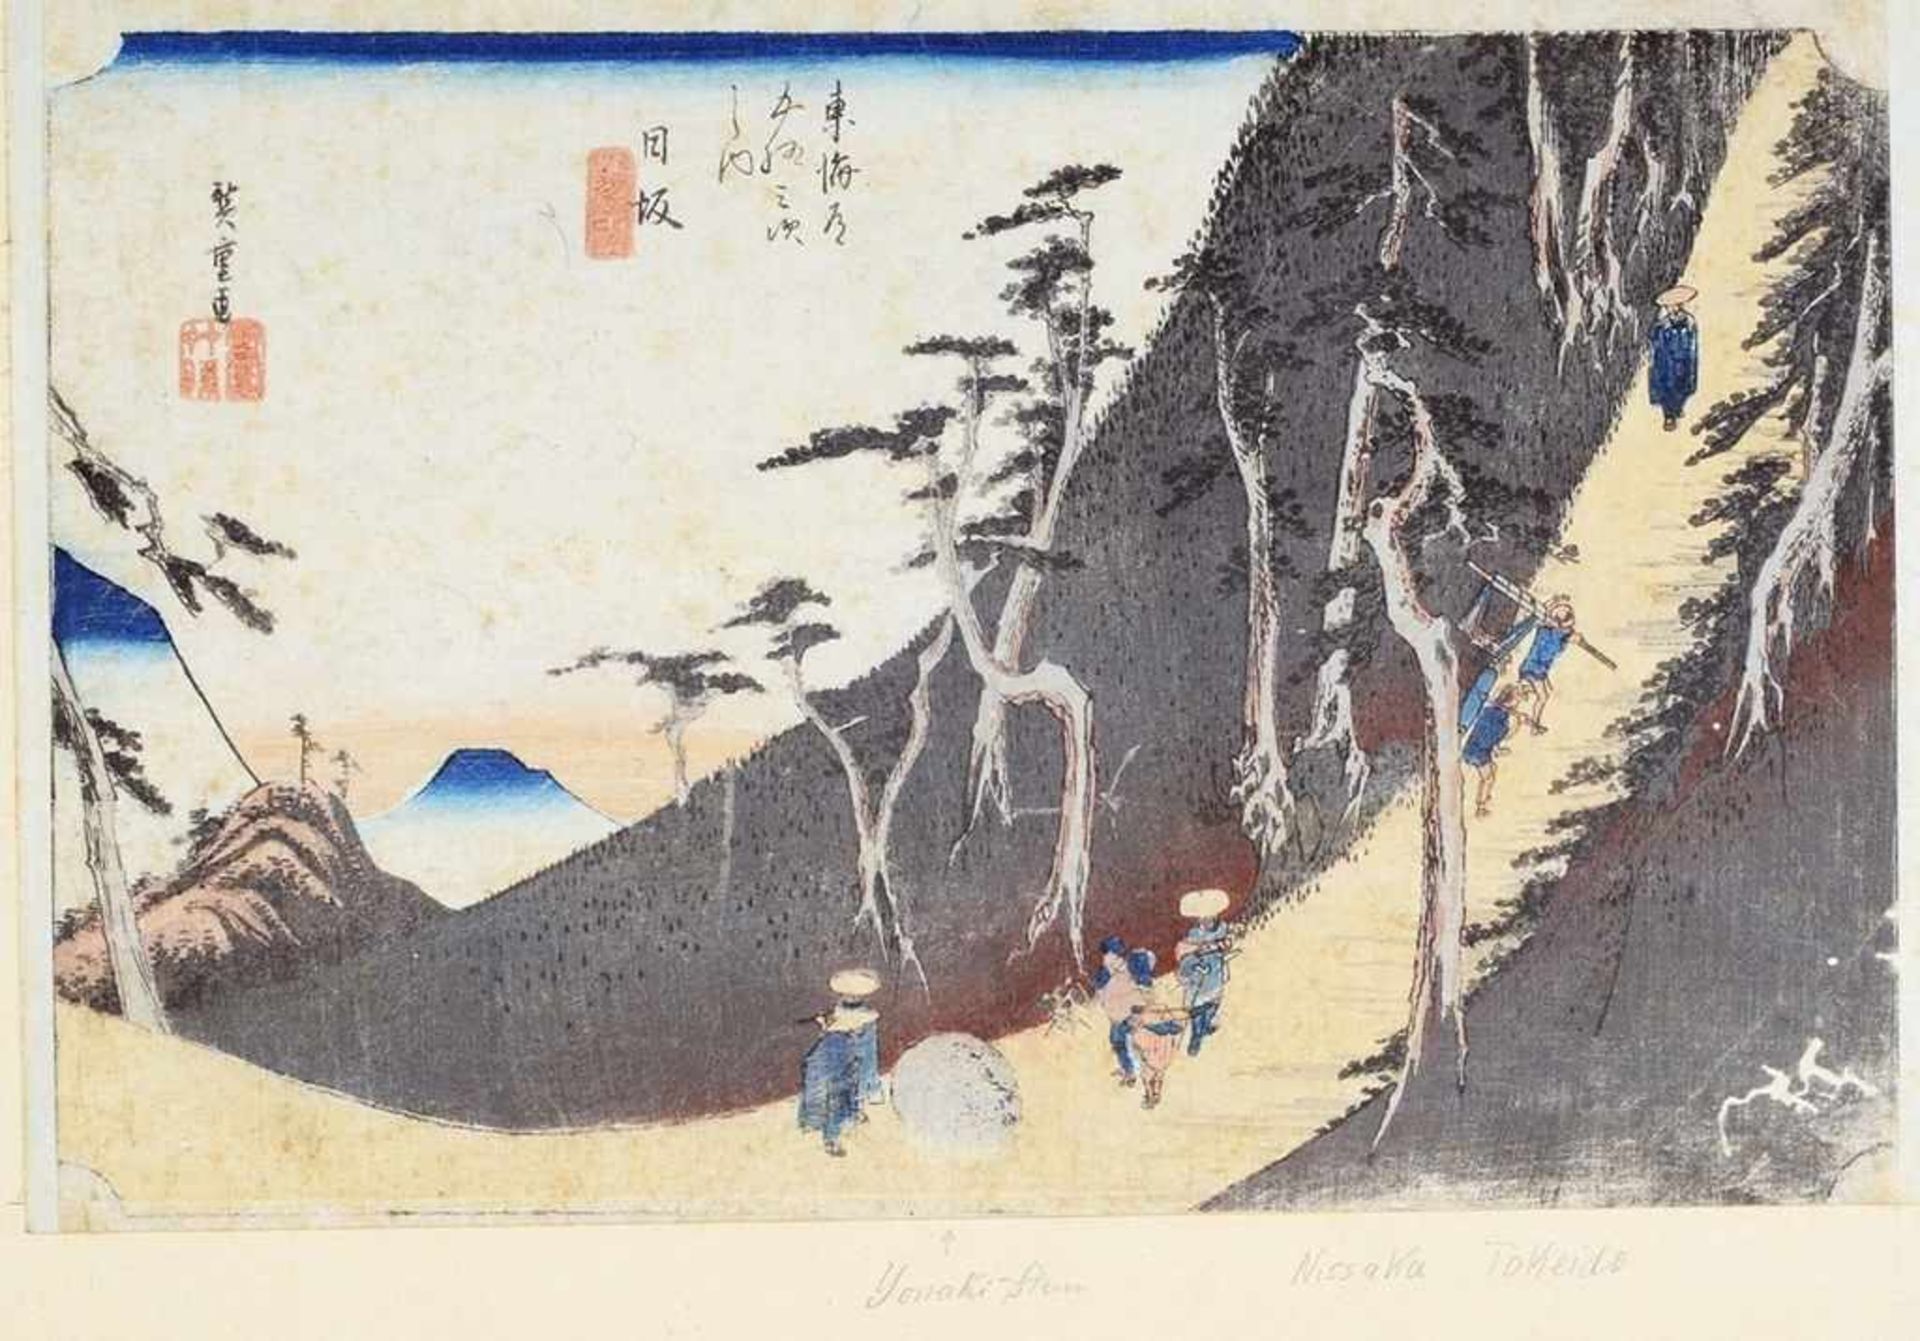 Hiroshige, Utagawa(auch Hiroshige, Ando/ Edo 1797-1858) Holzschnitt. "Nissaka: Sayo Mountain